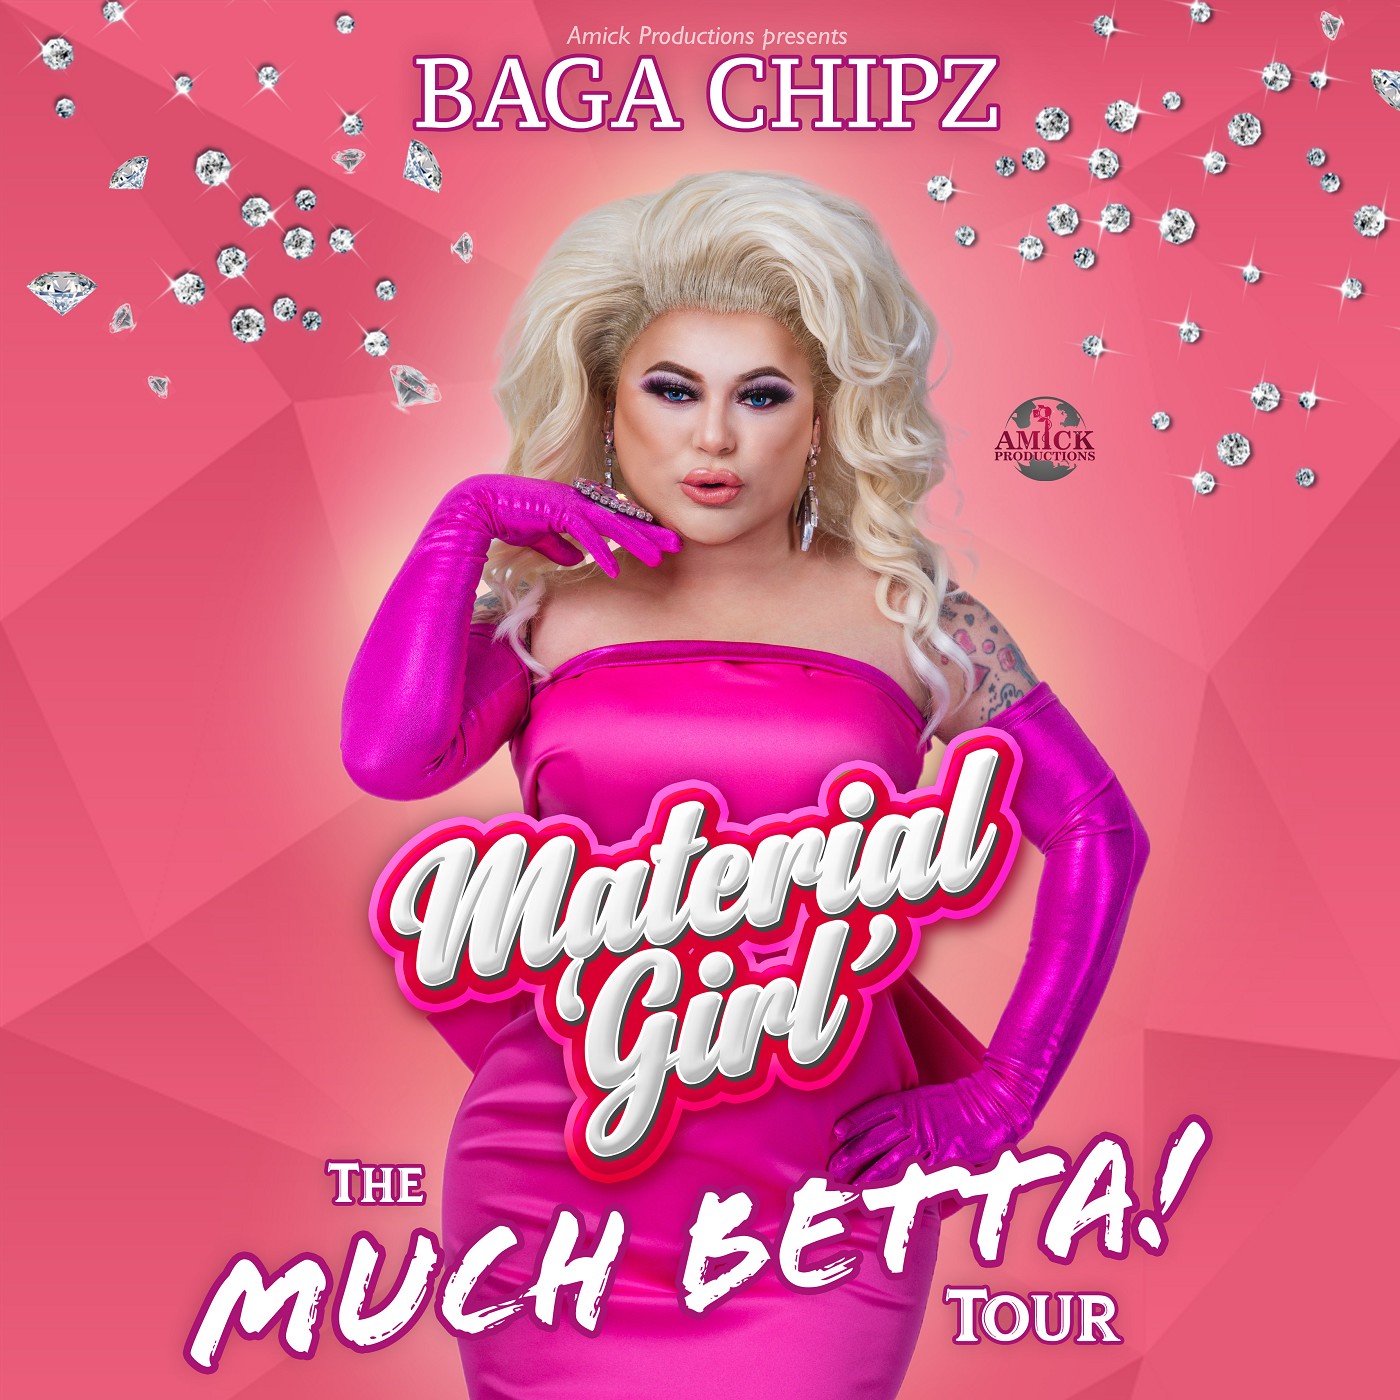 Baga Chipz Material Girl - Much Betta!